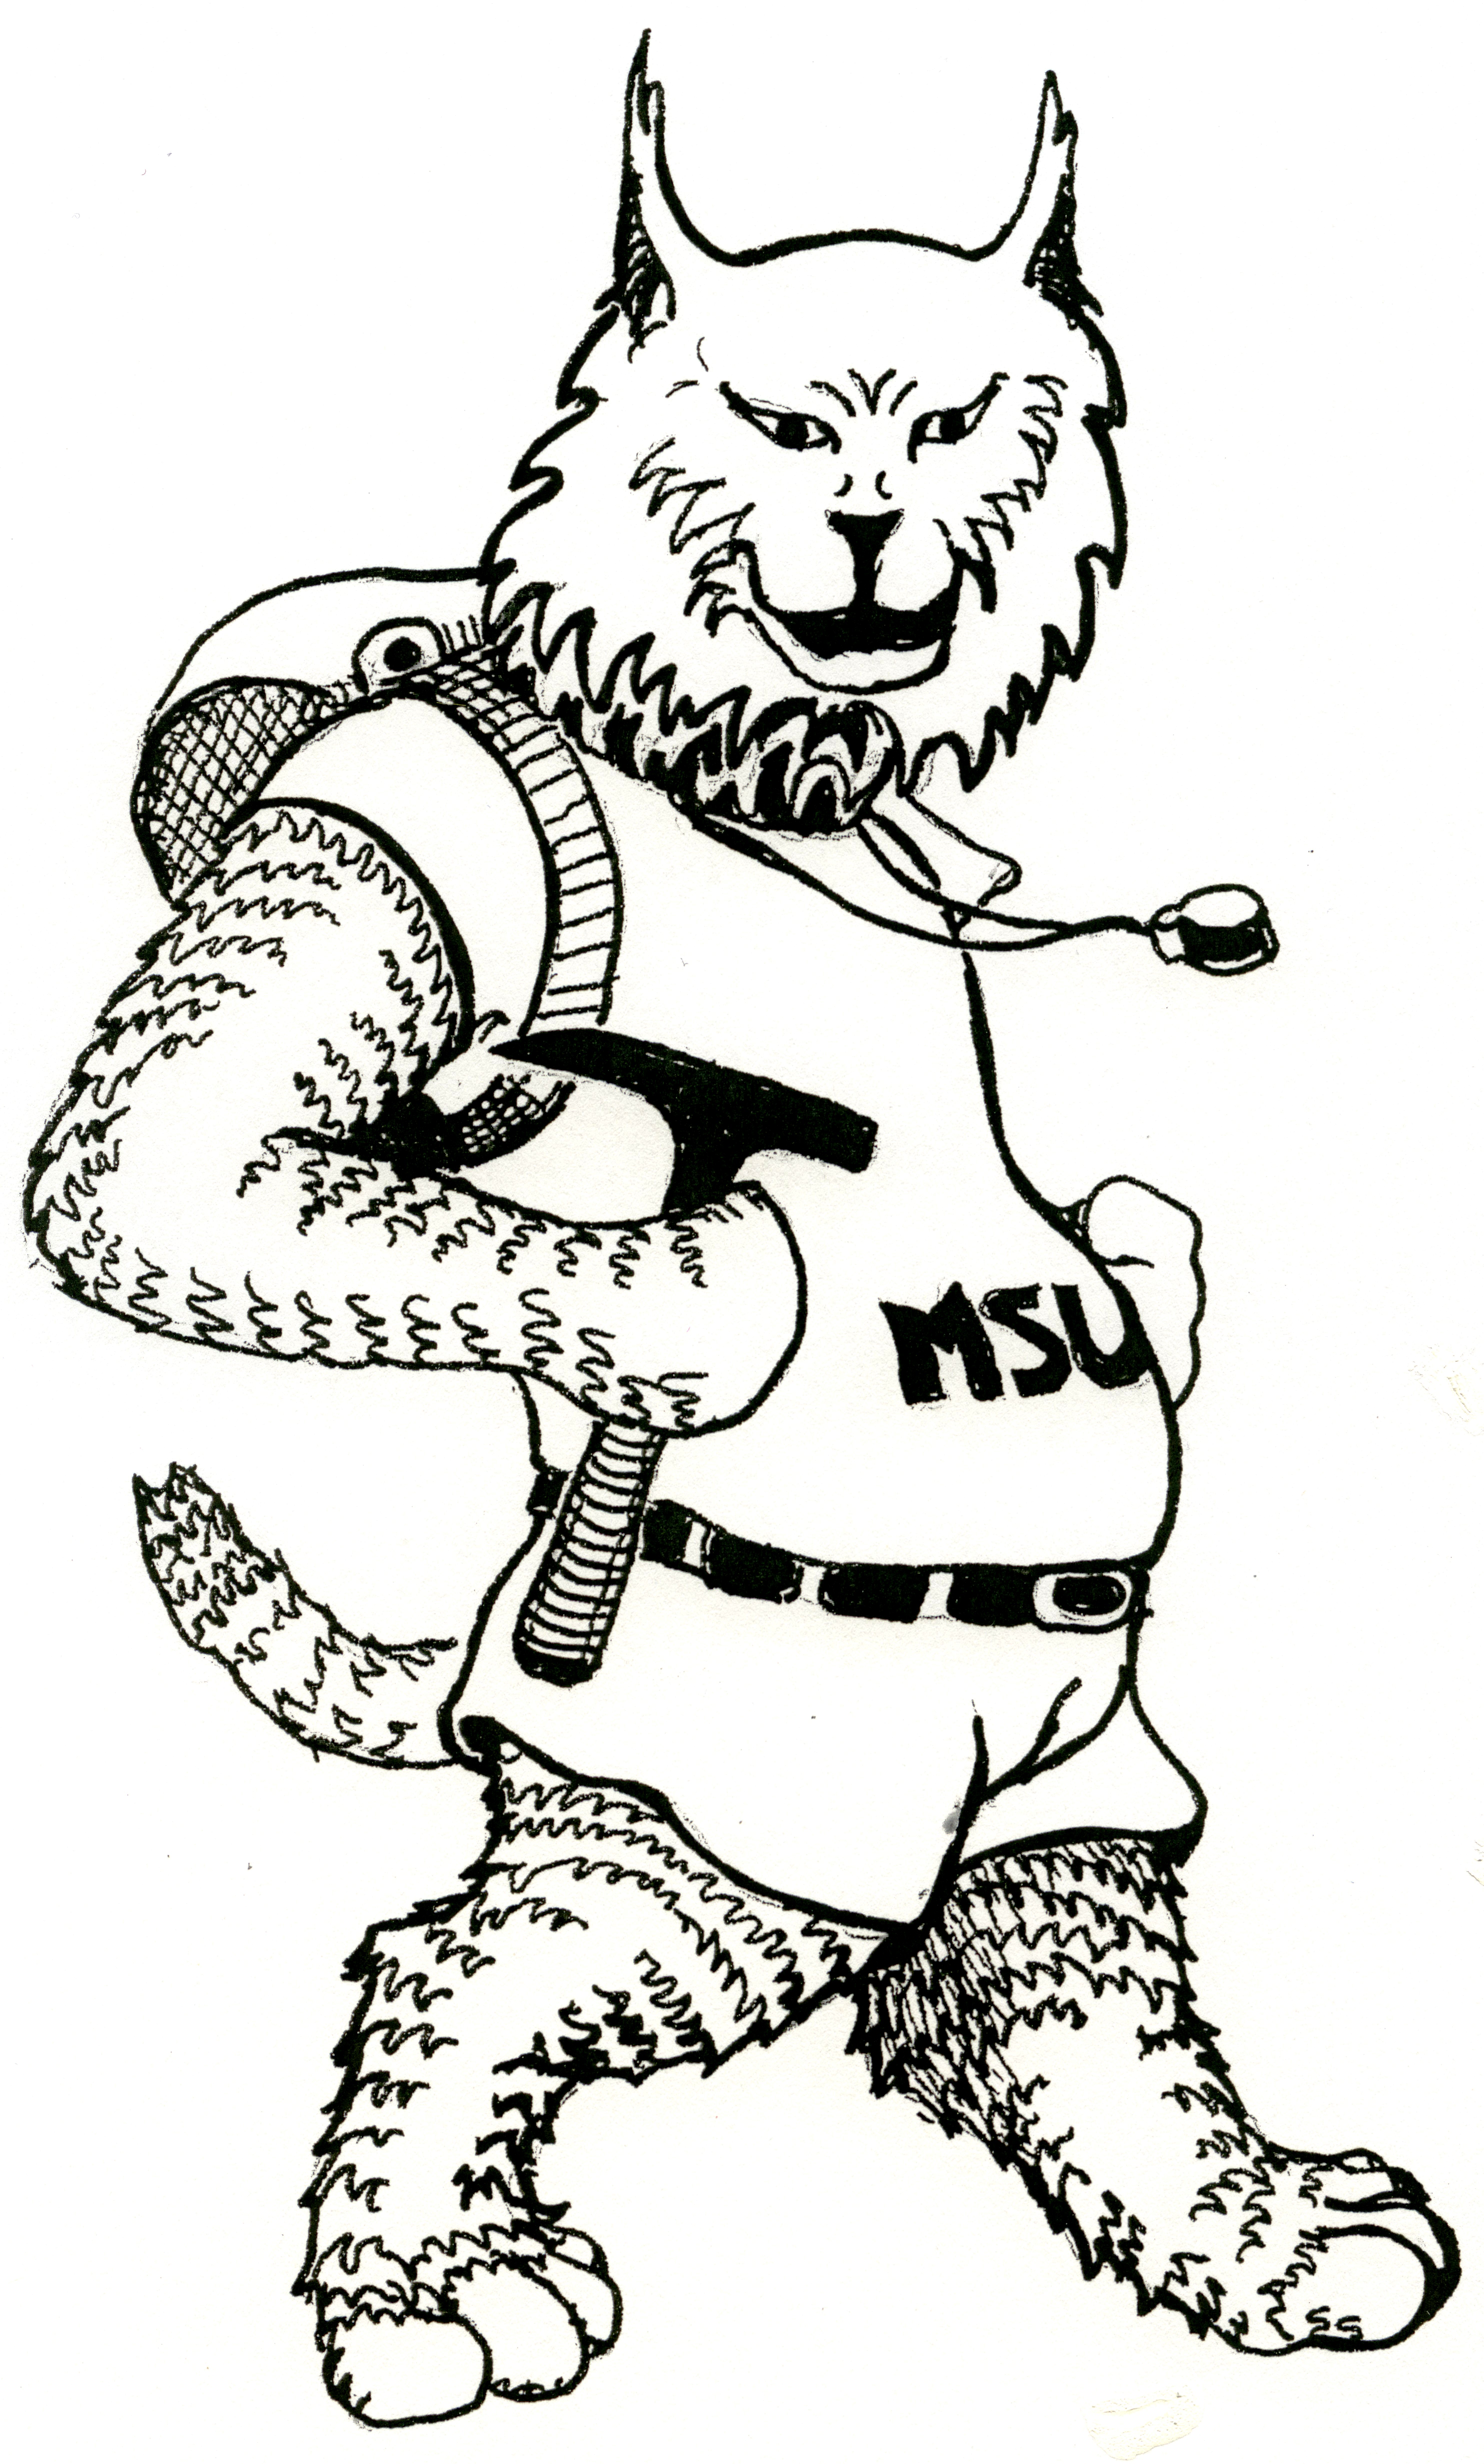 MSU bobcat mascot with geology hammer - cartoon